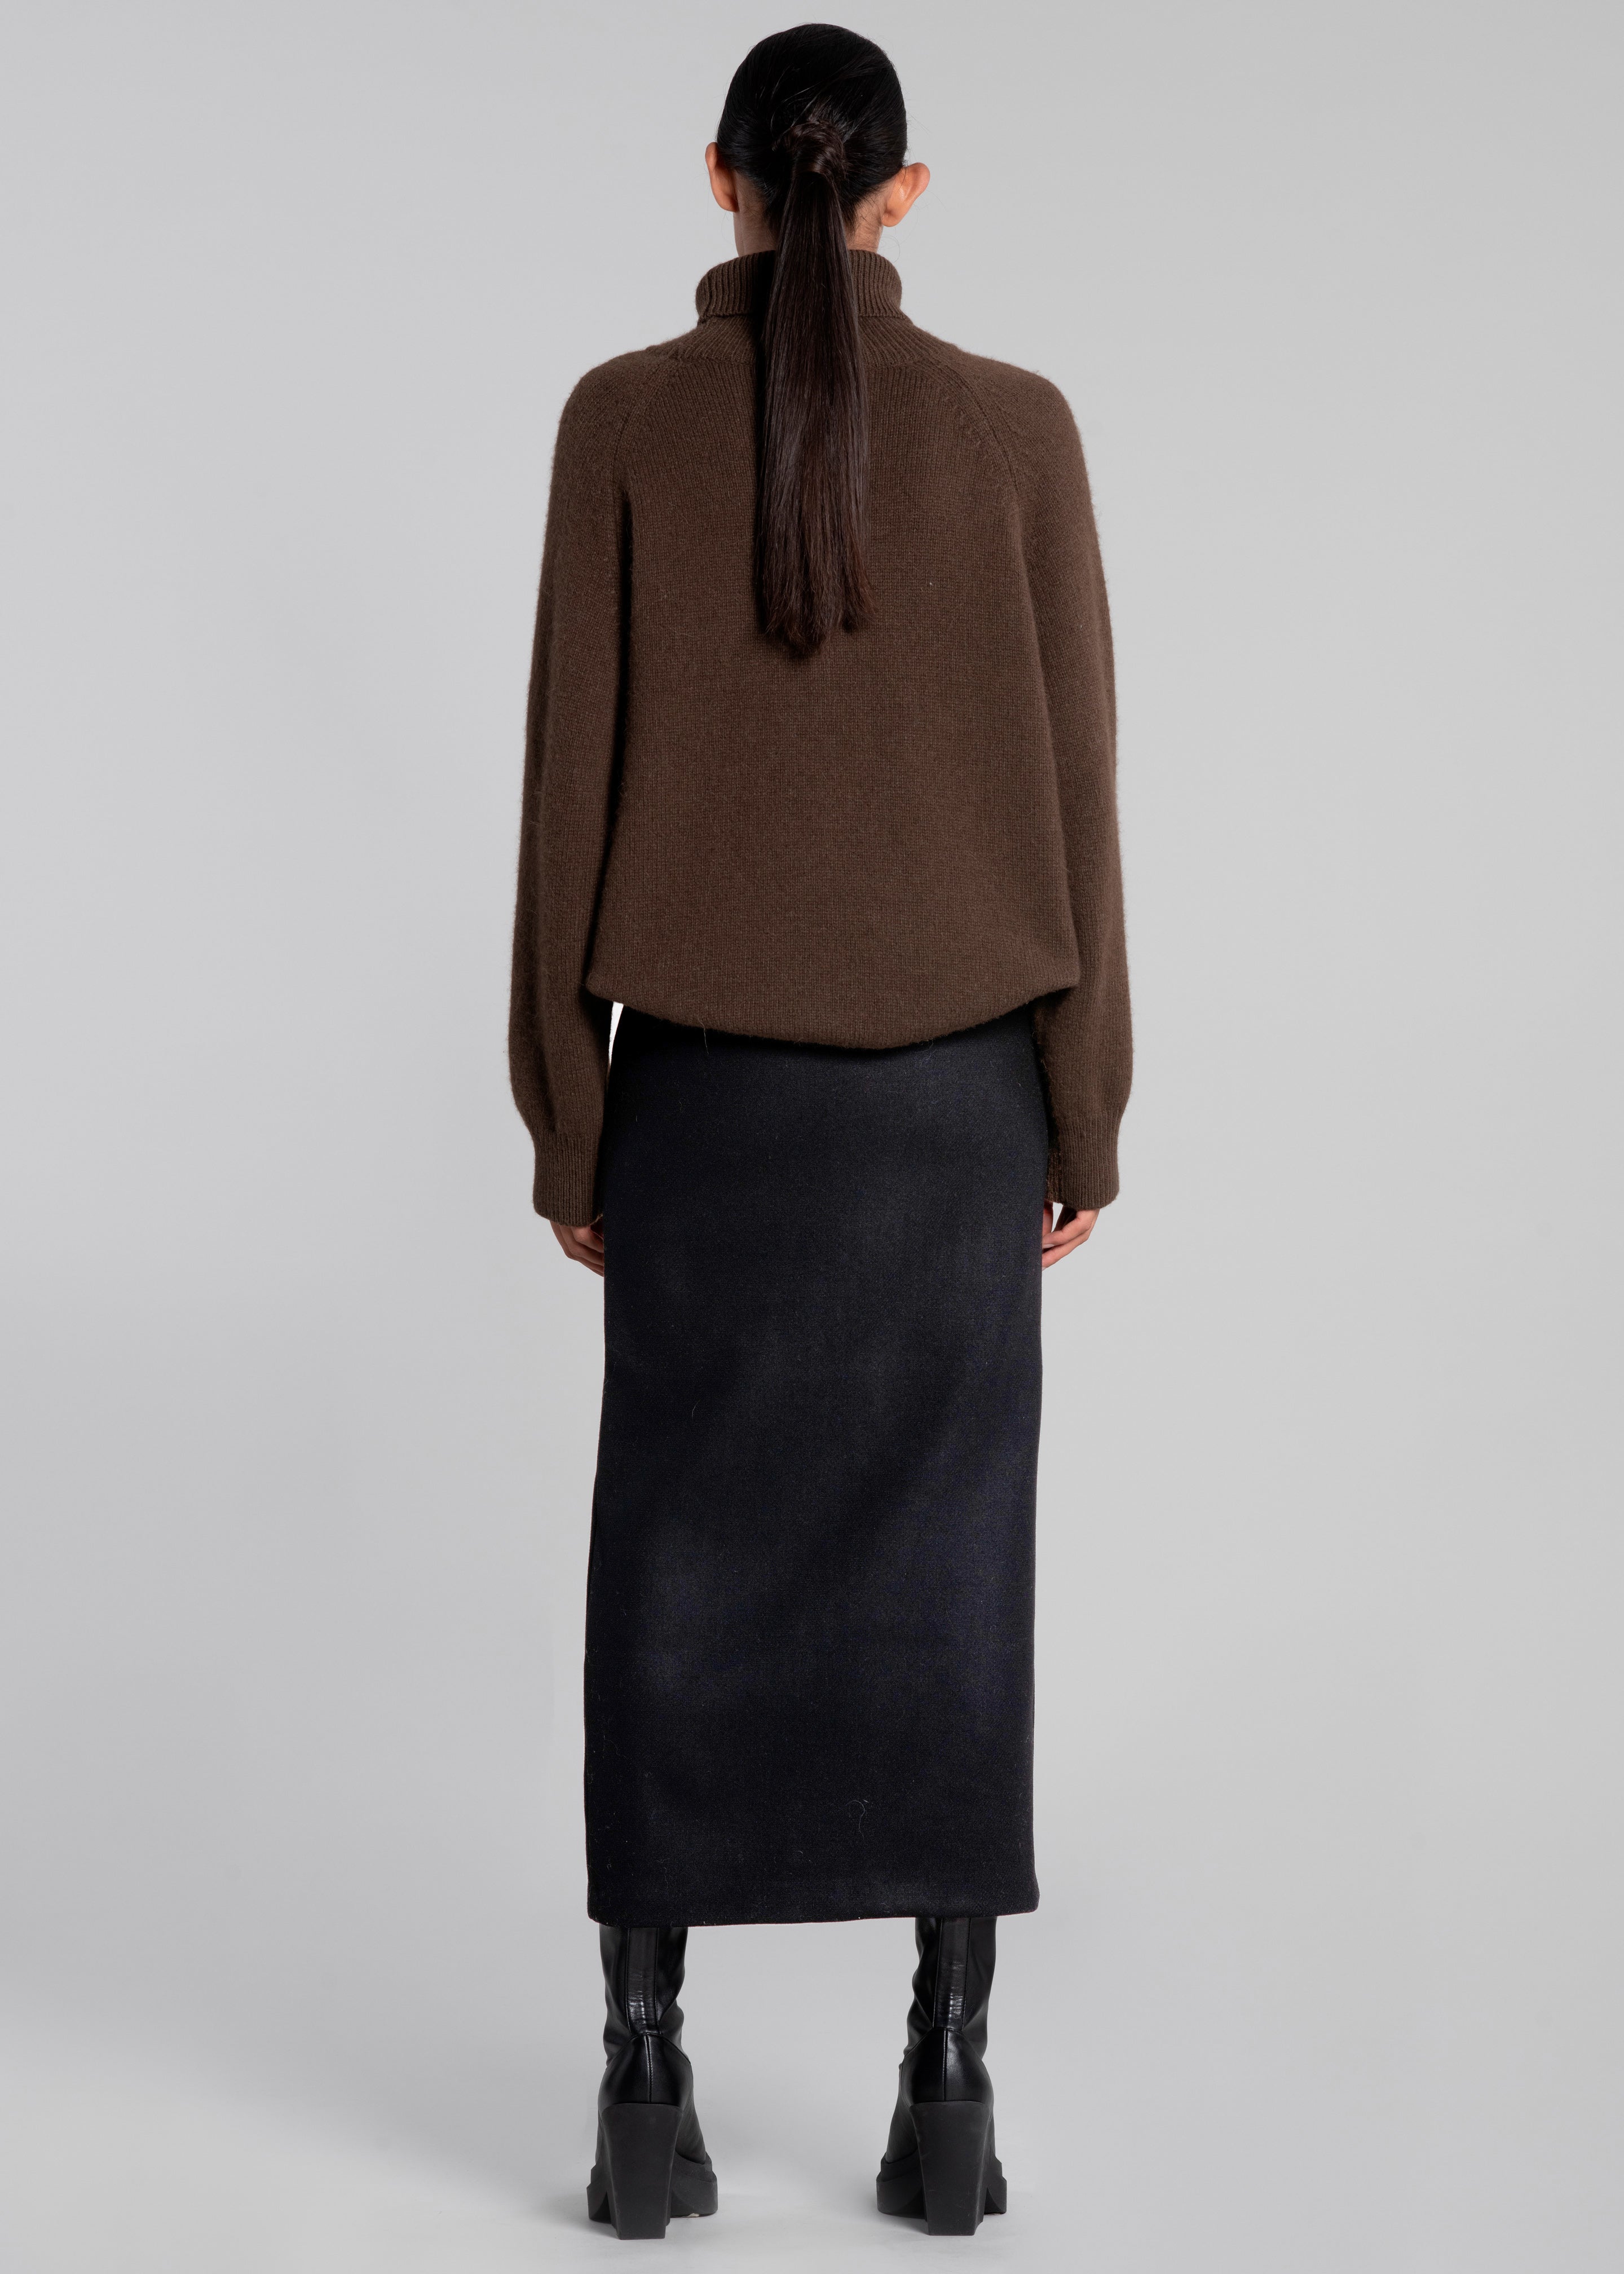 Neasi Wool-Blend Pencil Skirt - Black - 7